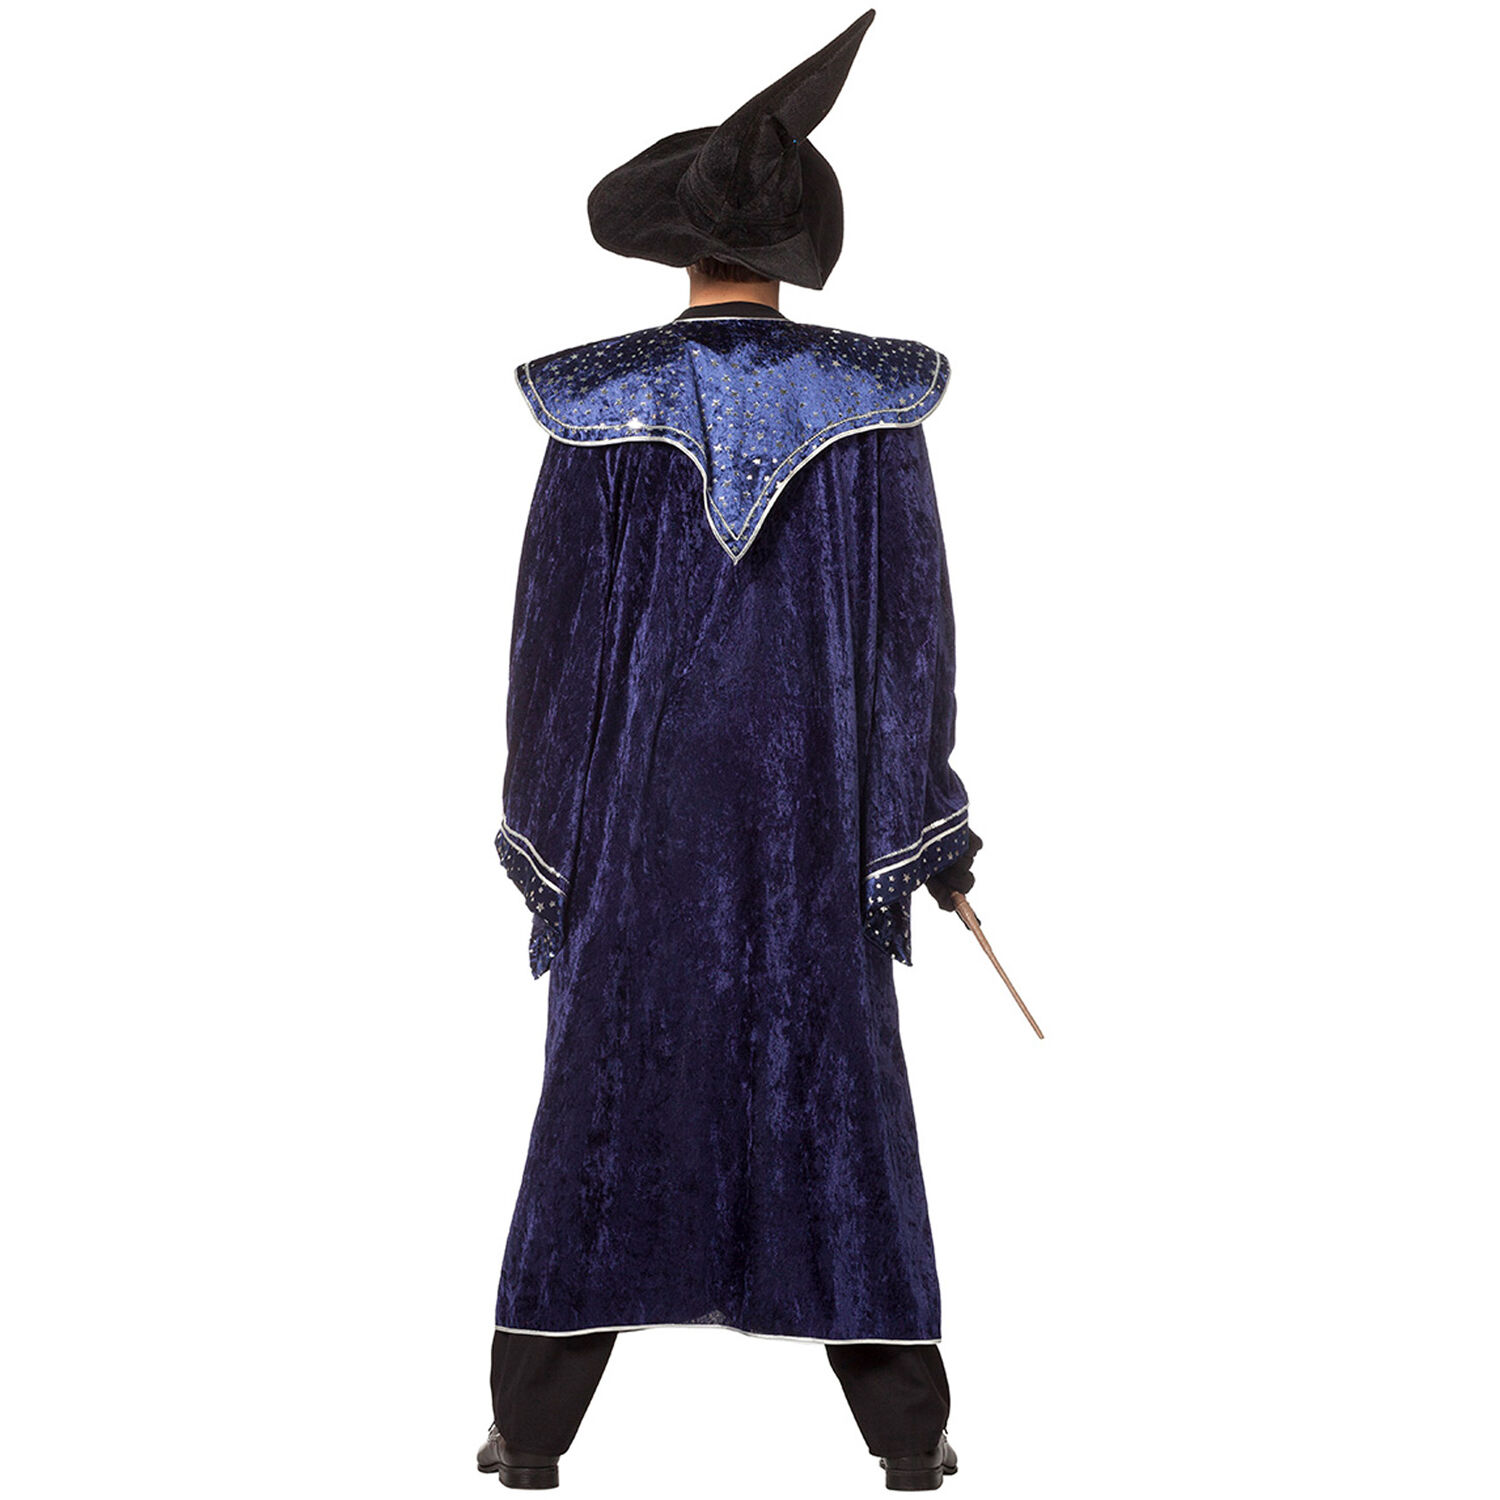 Herren-Kostüm Zauberer, dunkelblau, Gr. 50-52 Bild 3